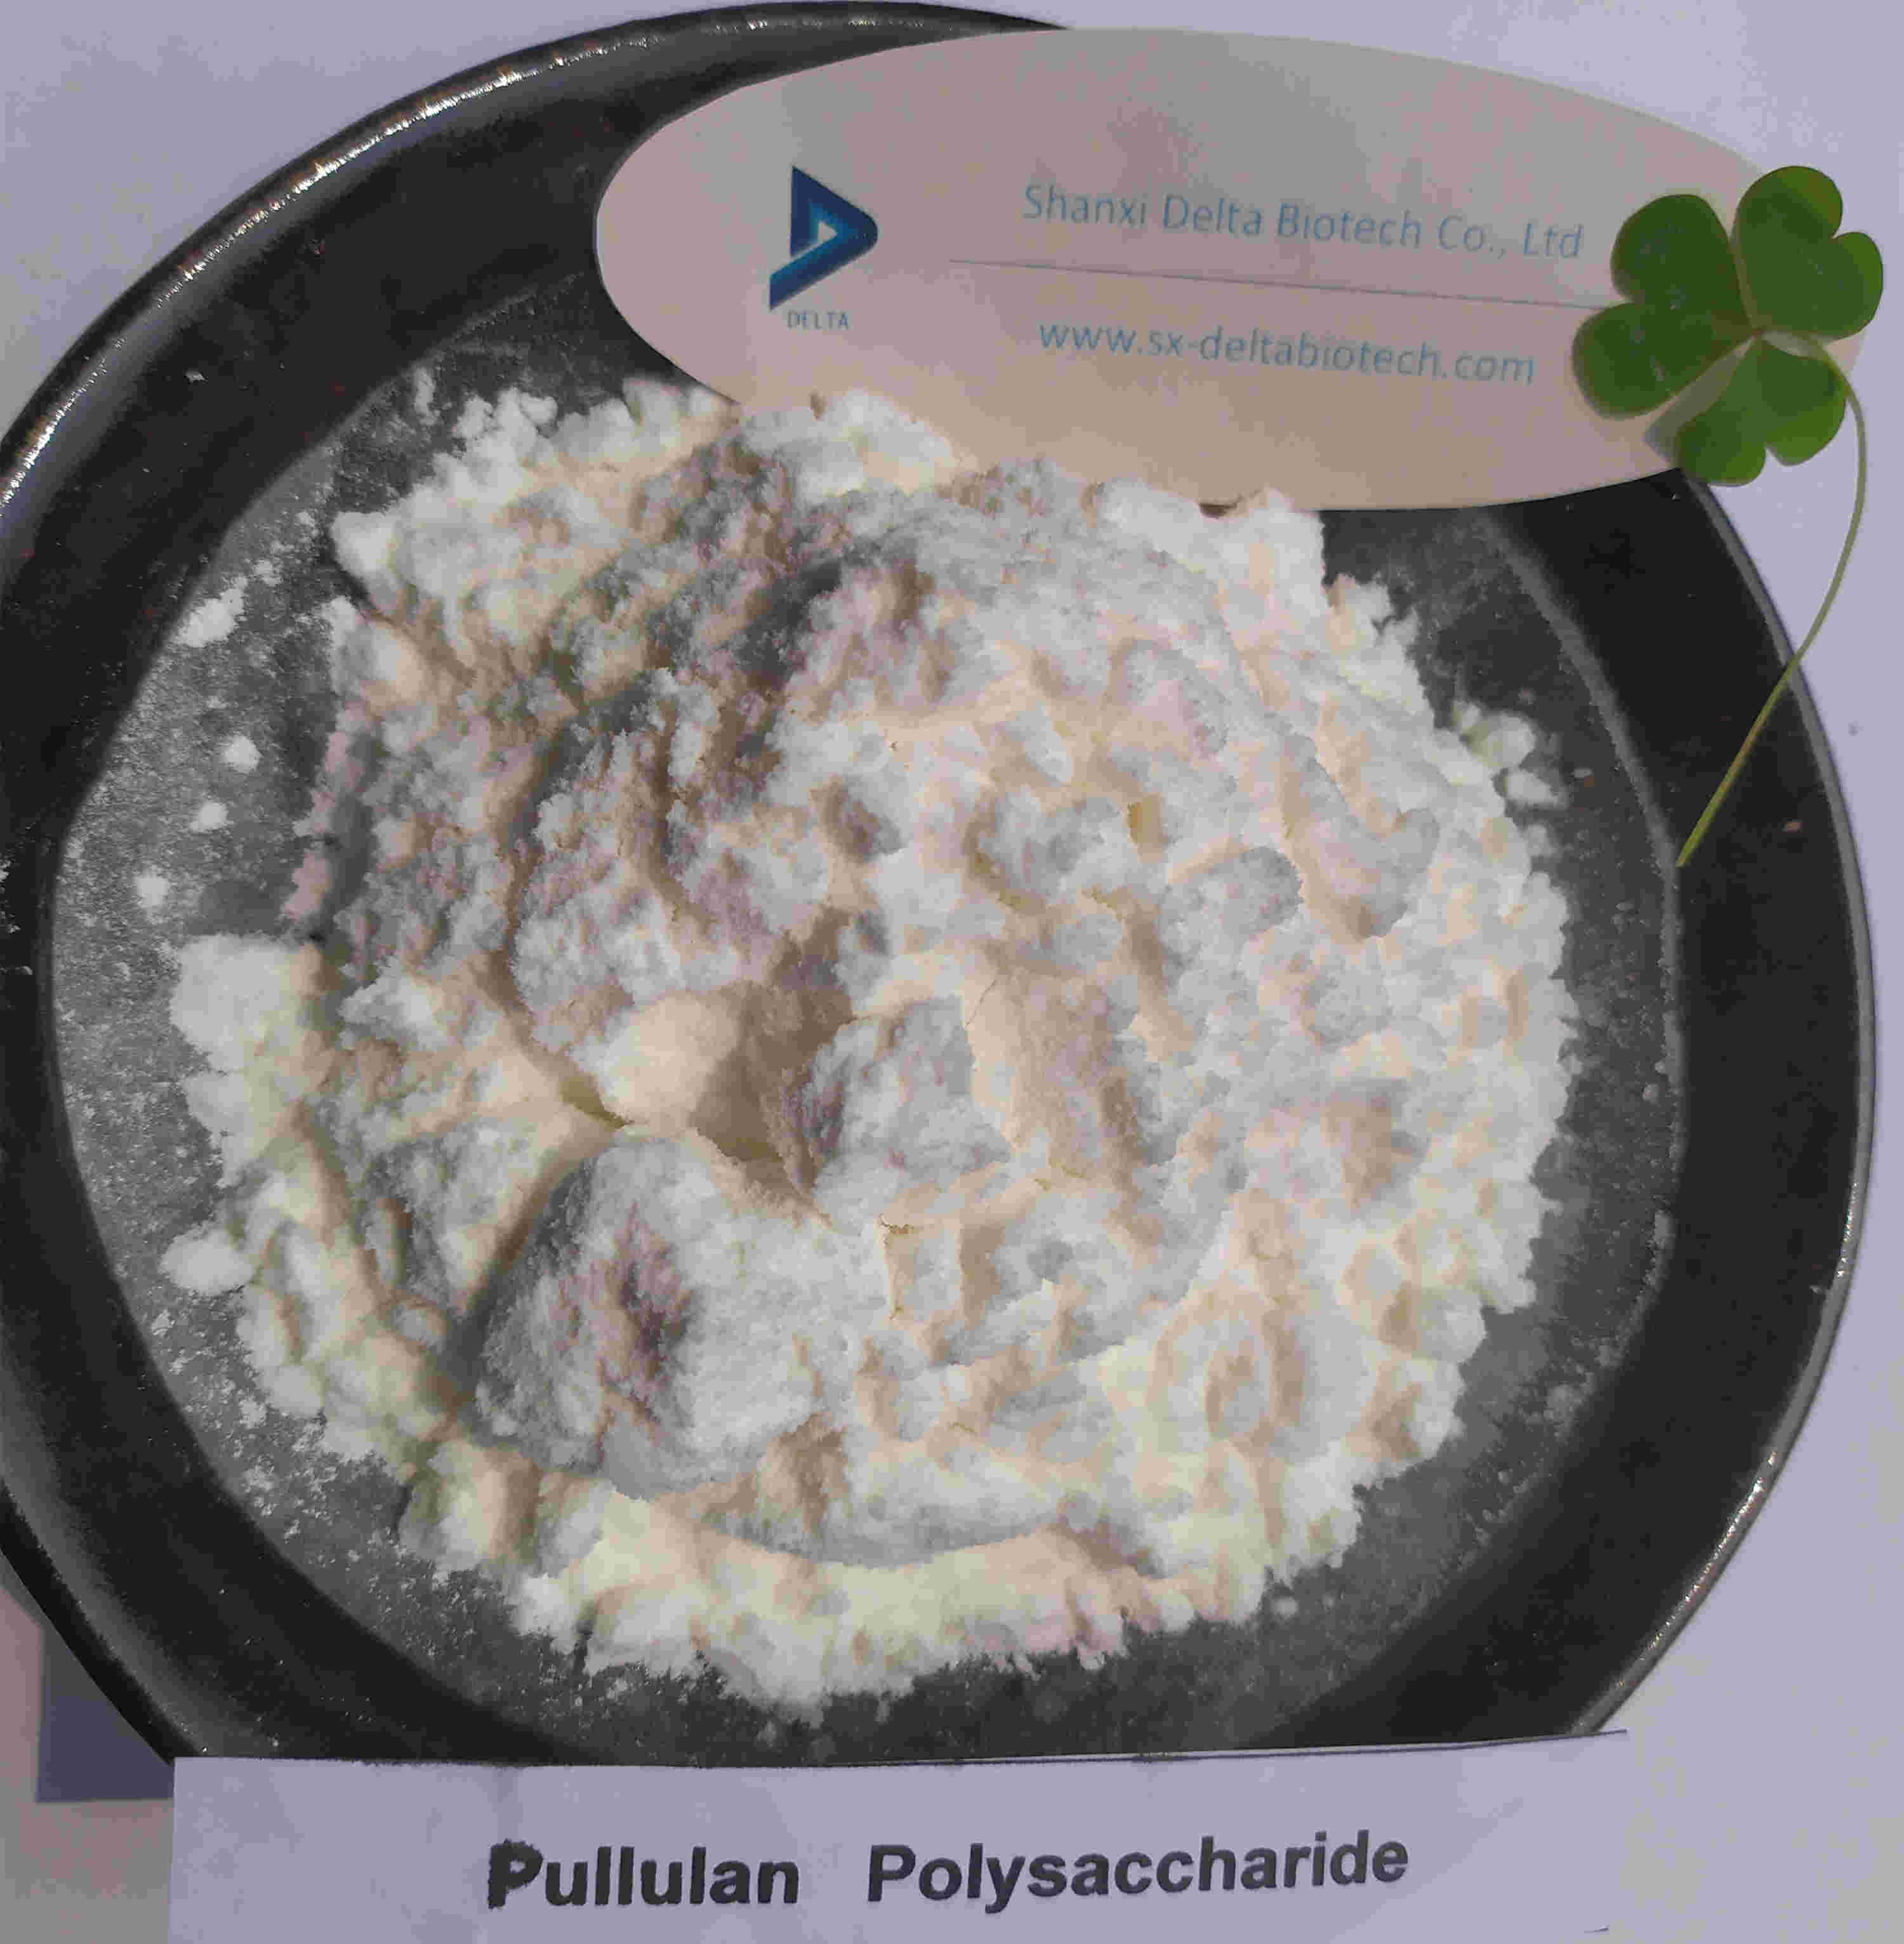 Food & Cosmetic Grade Pullulan